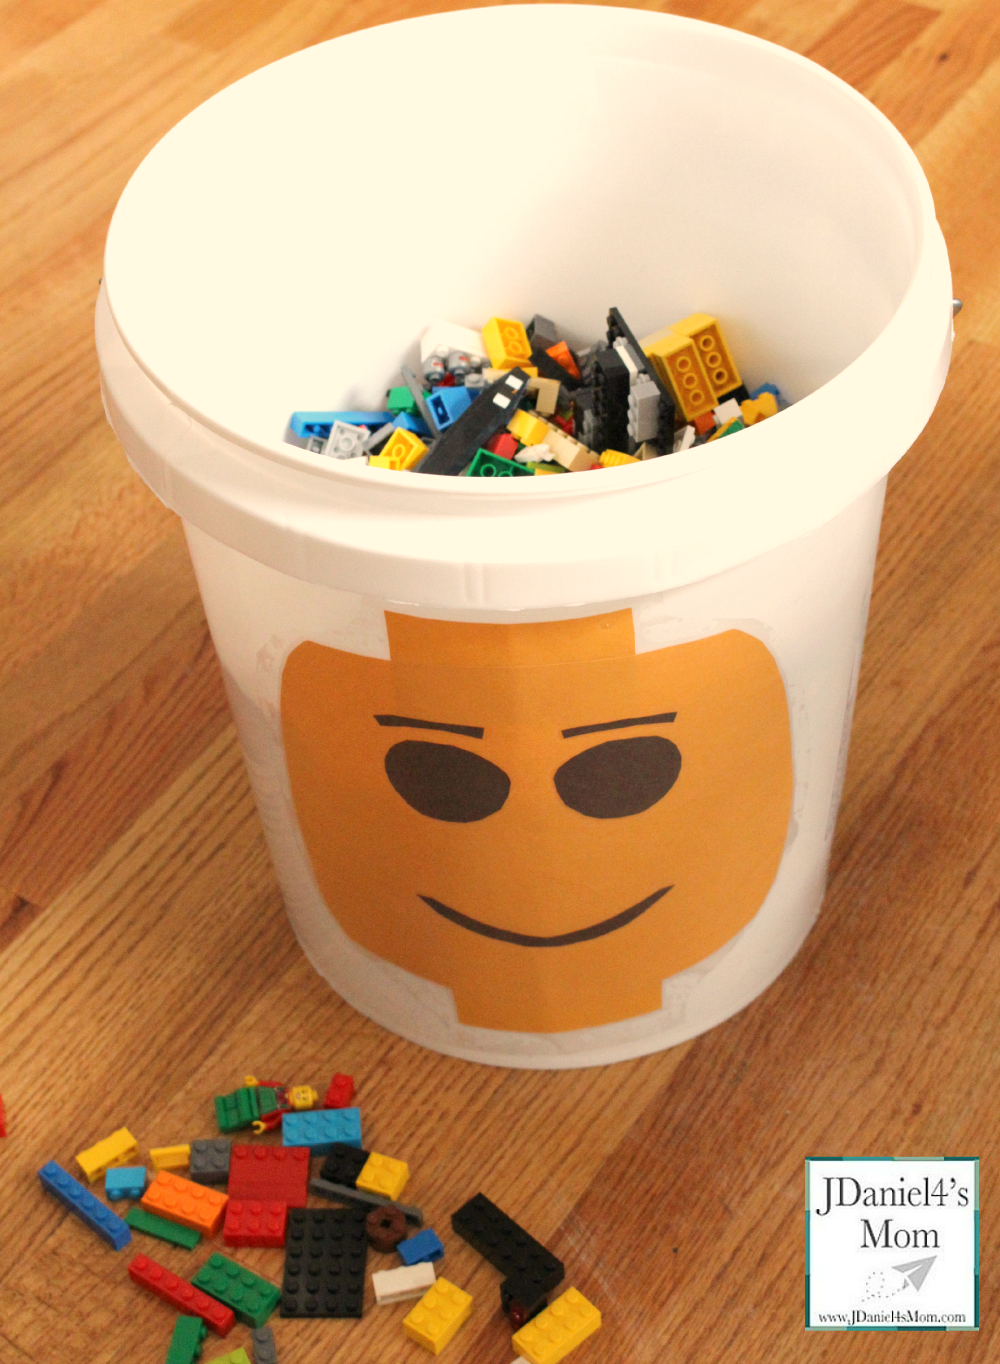 Homemade LEGO Storage Bucket